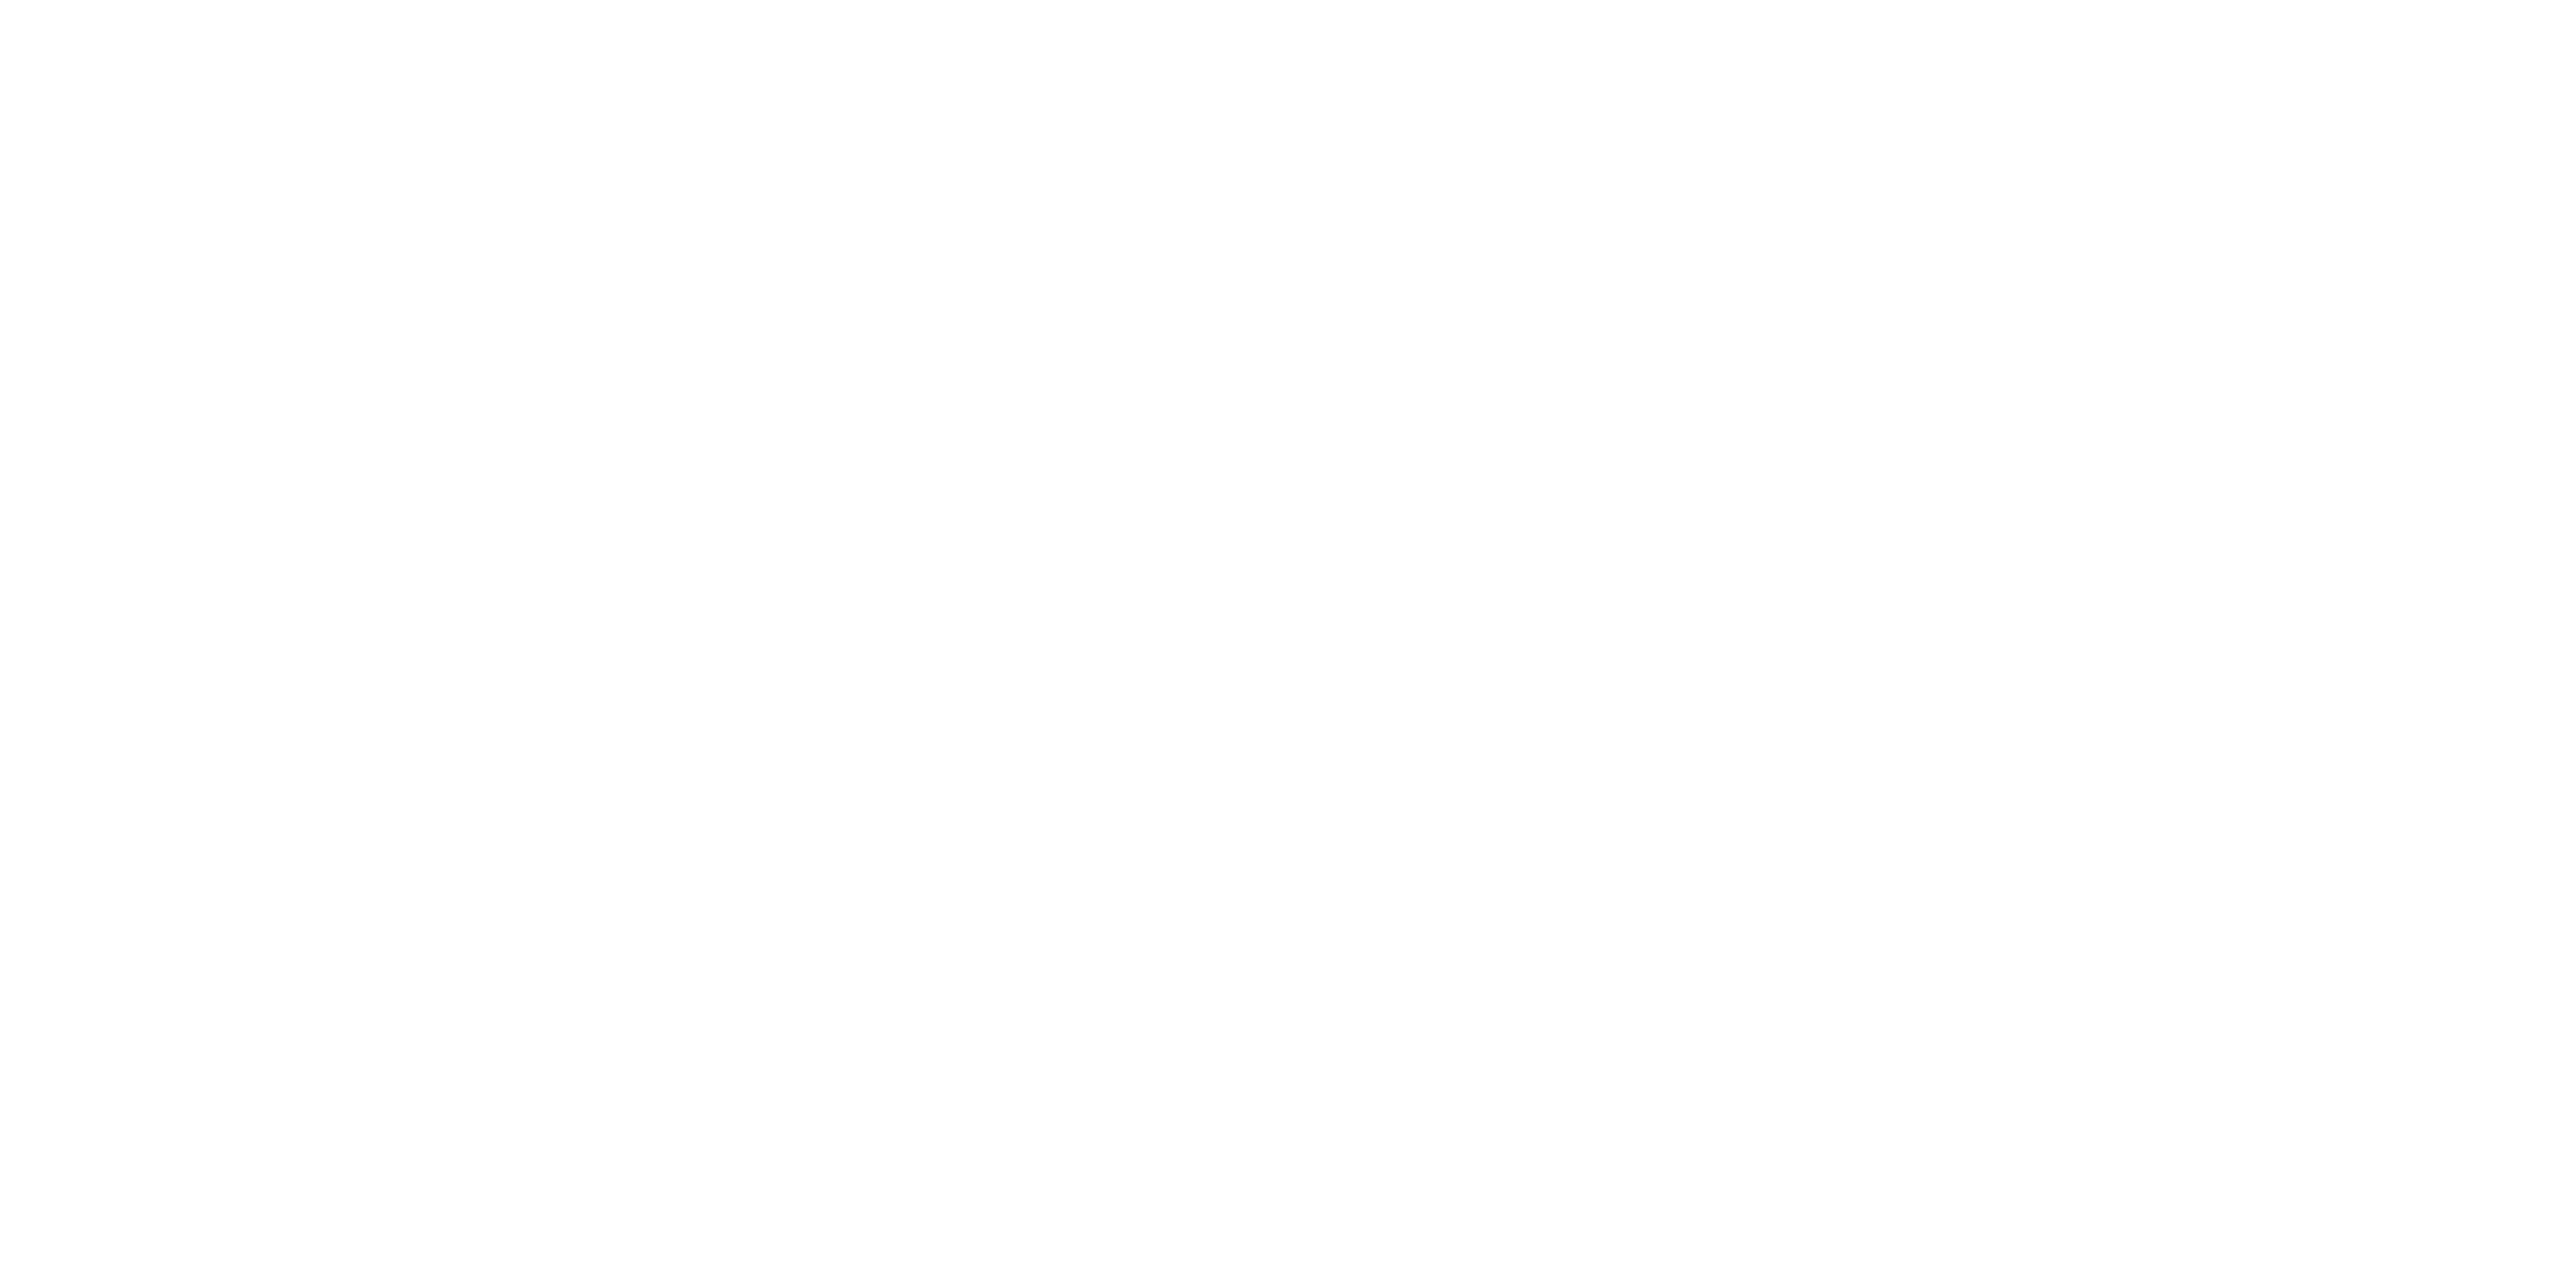 Wildwood_Customs_logo_white_textured